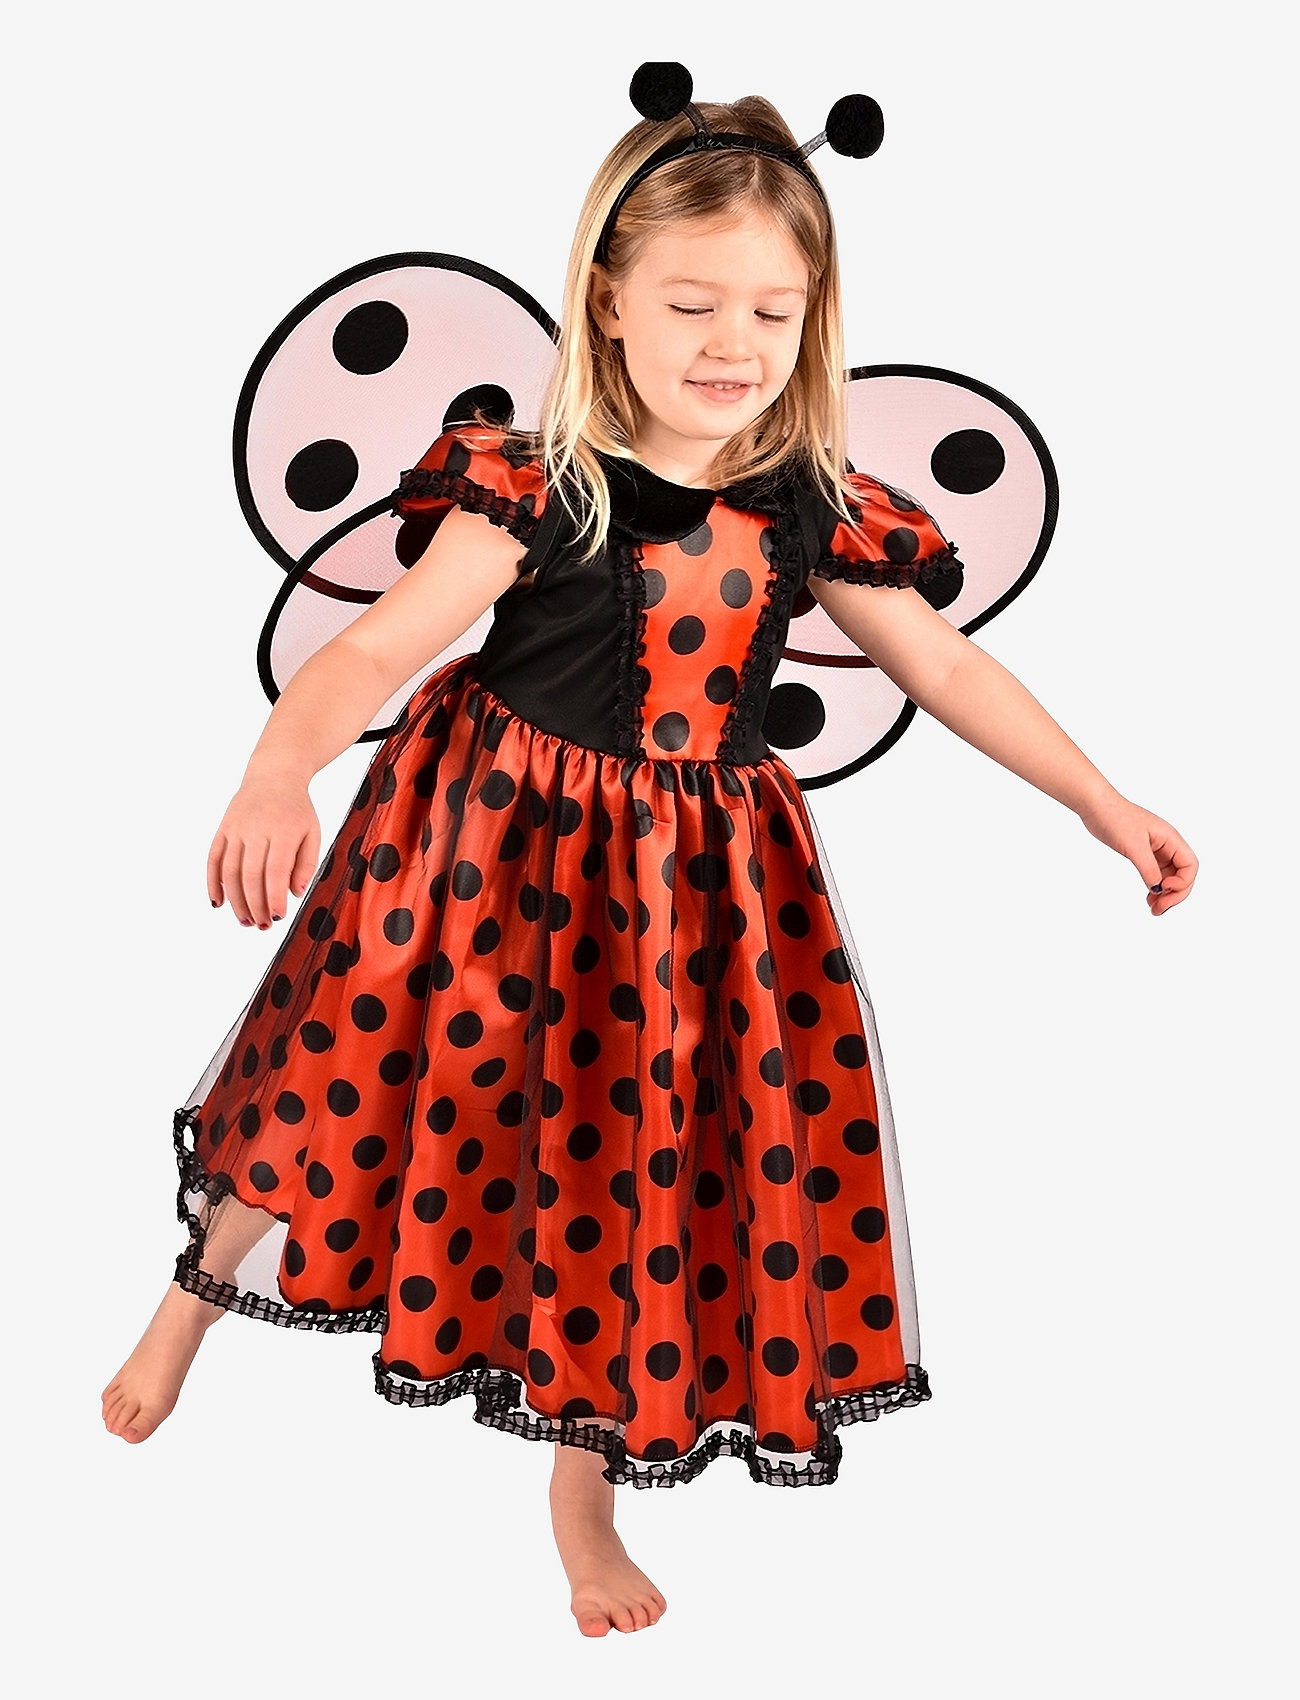 Den goda fen - Ladybug Costume - costumes - red/black - 0